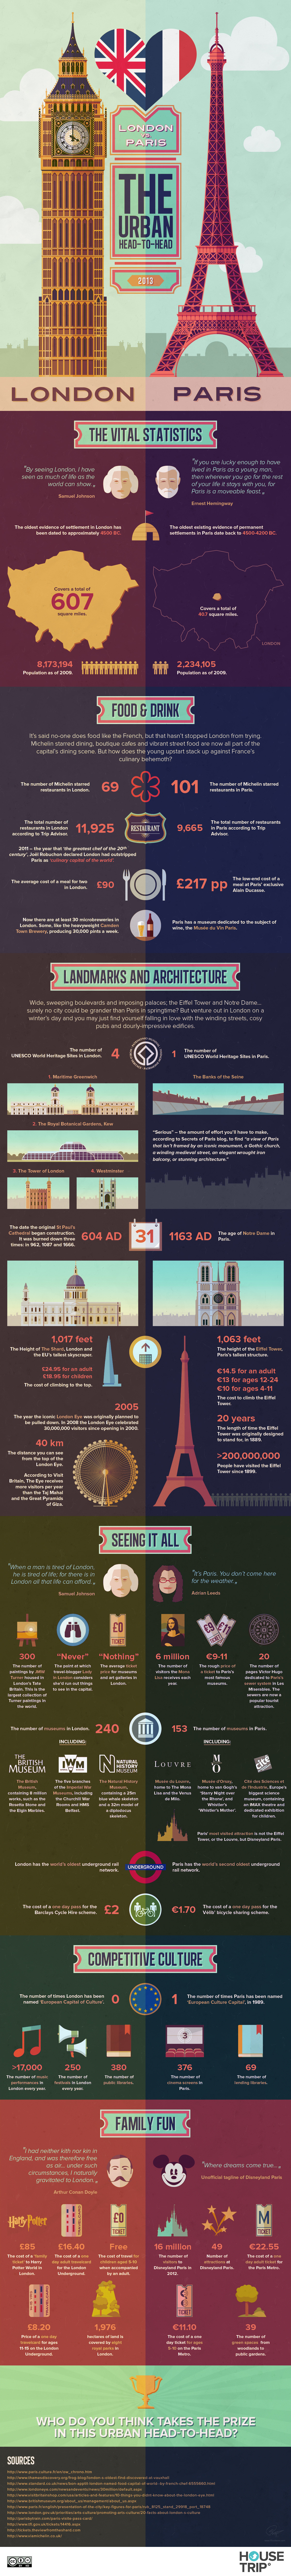 ben big tower eiffel infographic city Urban vs. Paris London